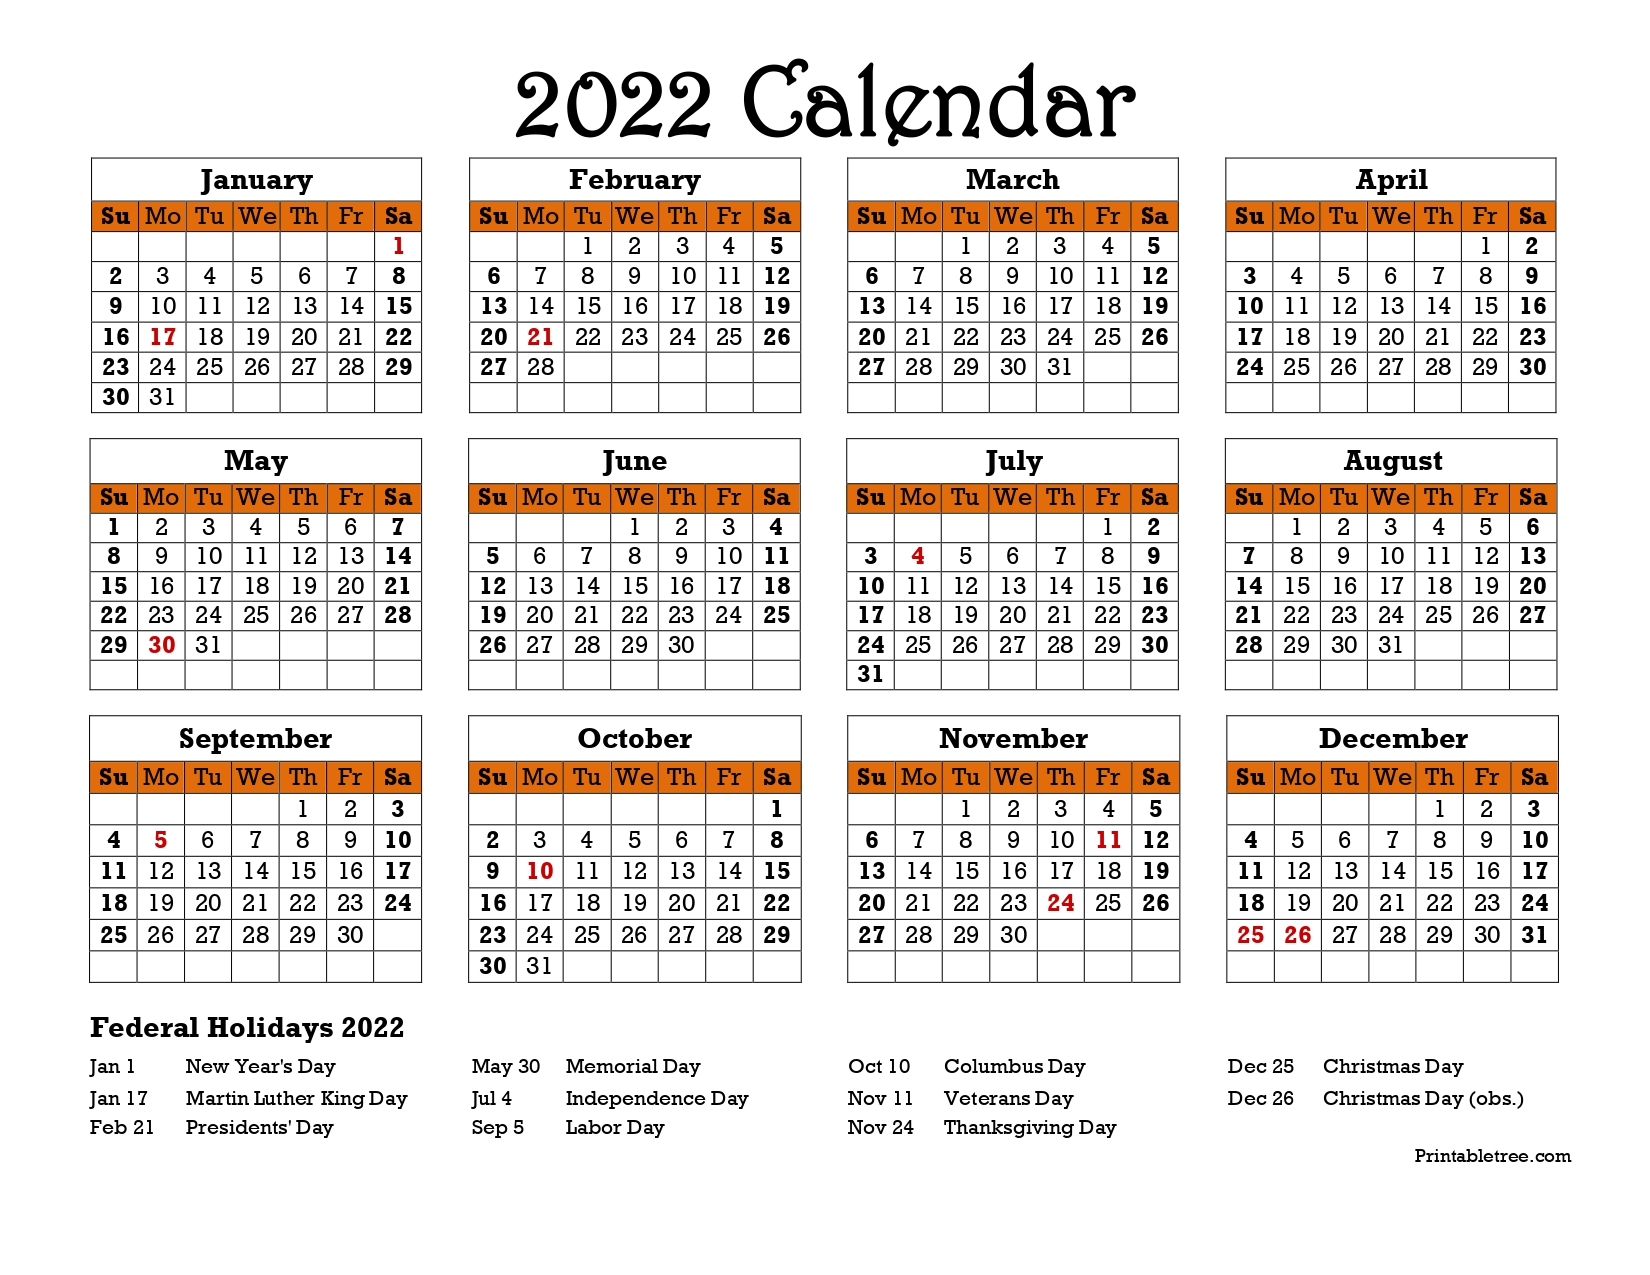 Federal Holidays 2022 Calendar On One Sheet